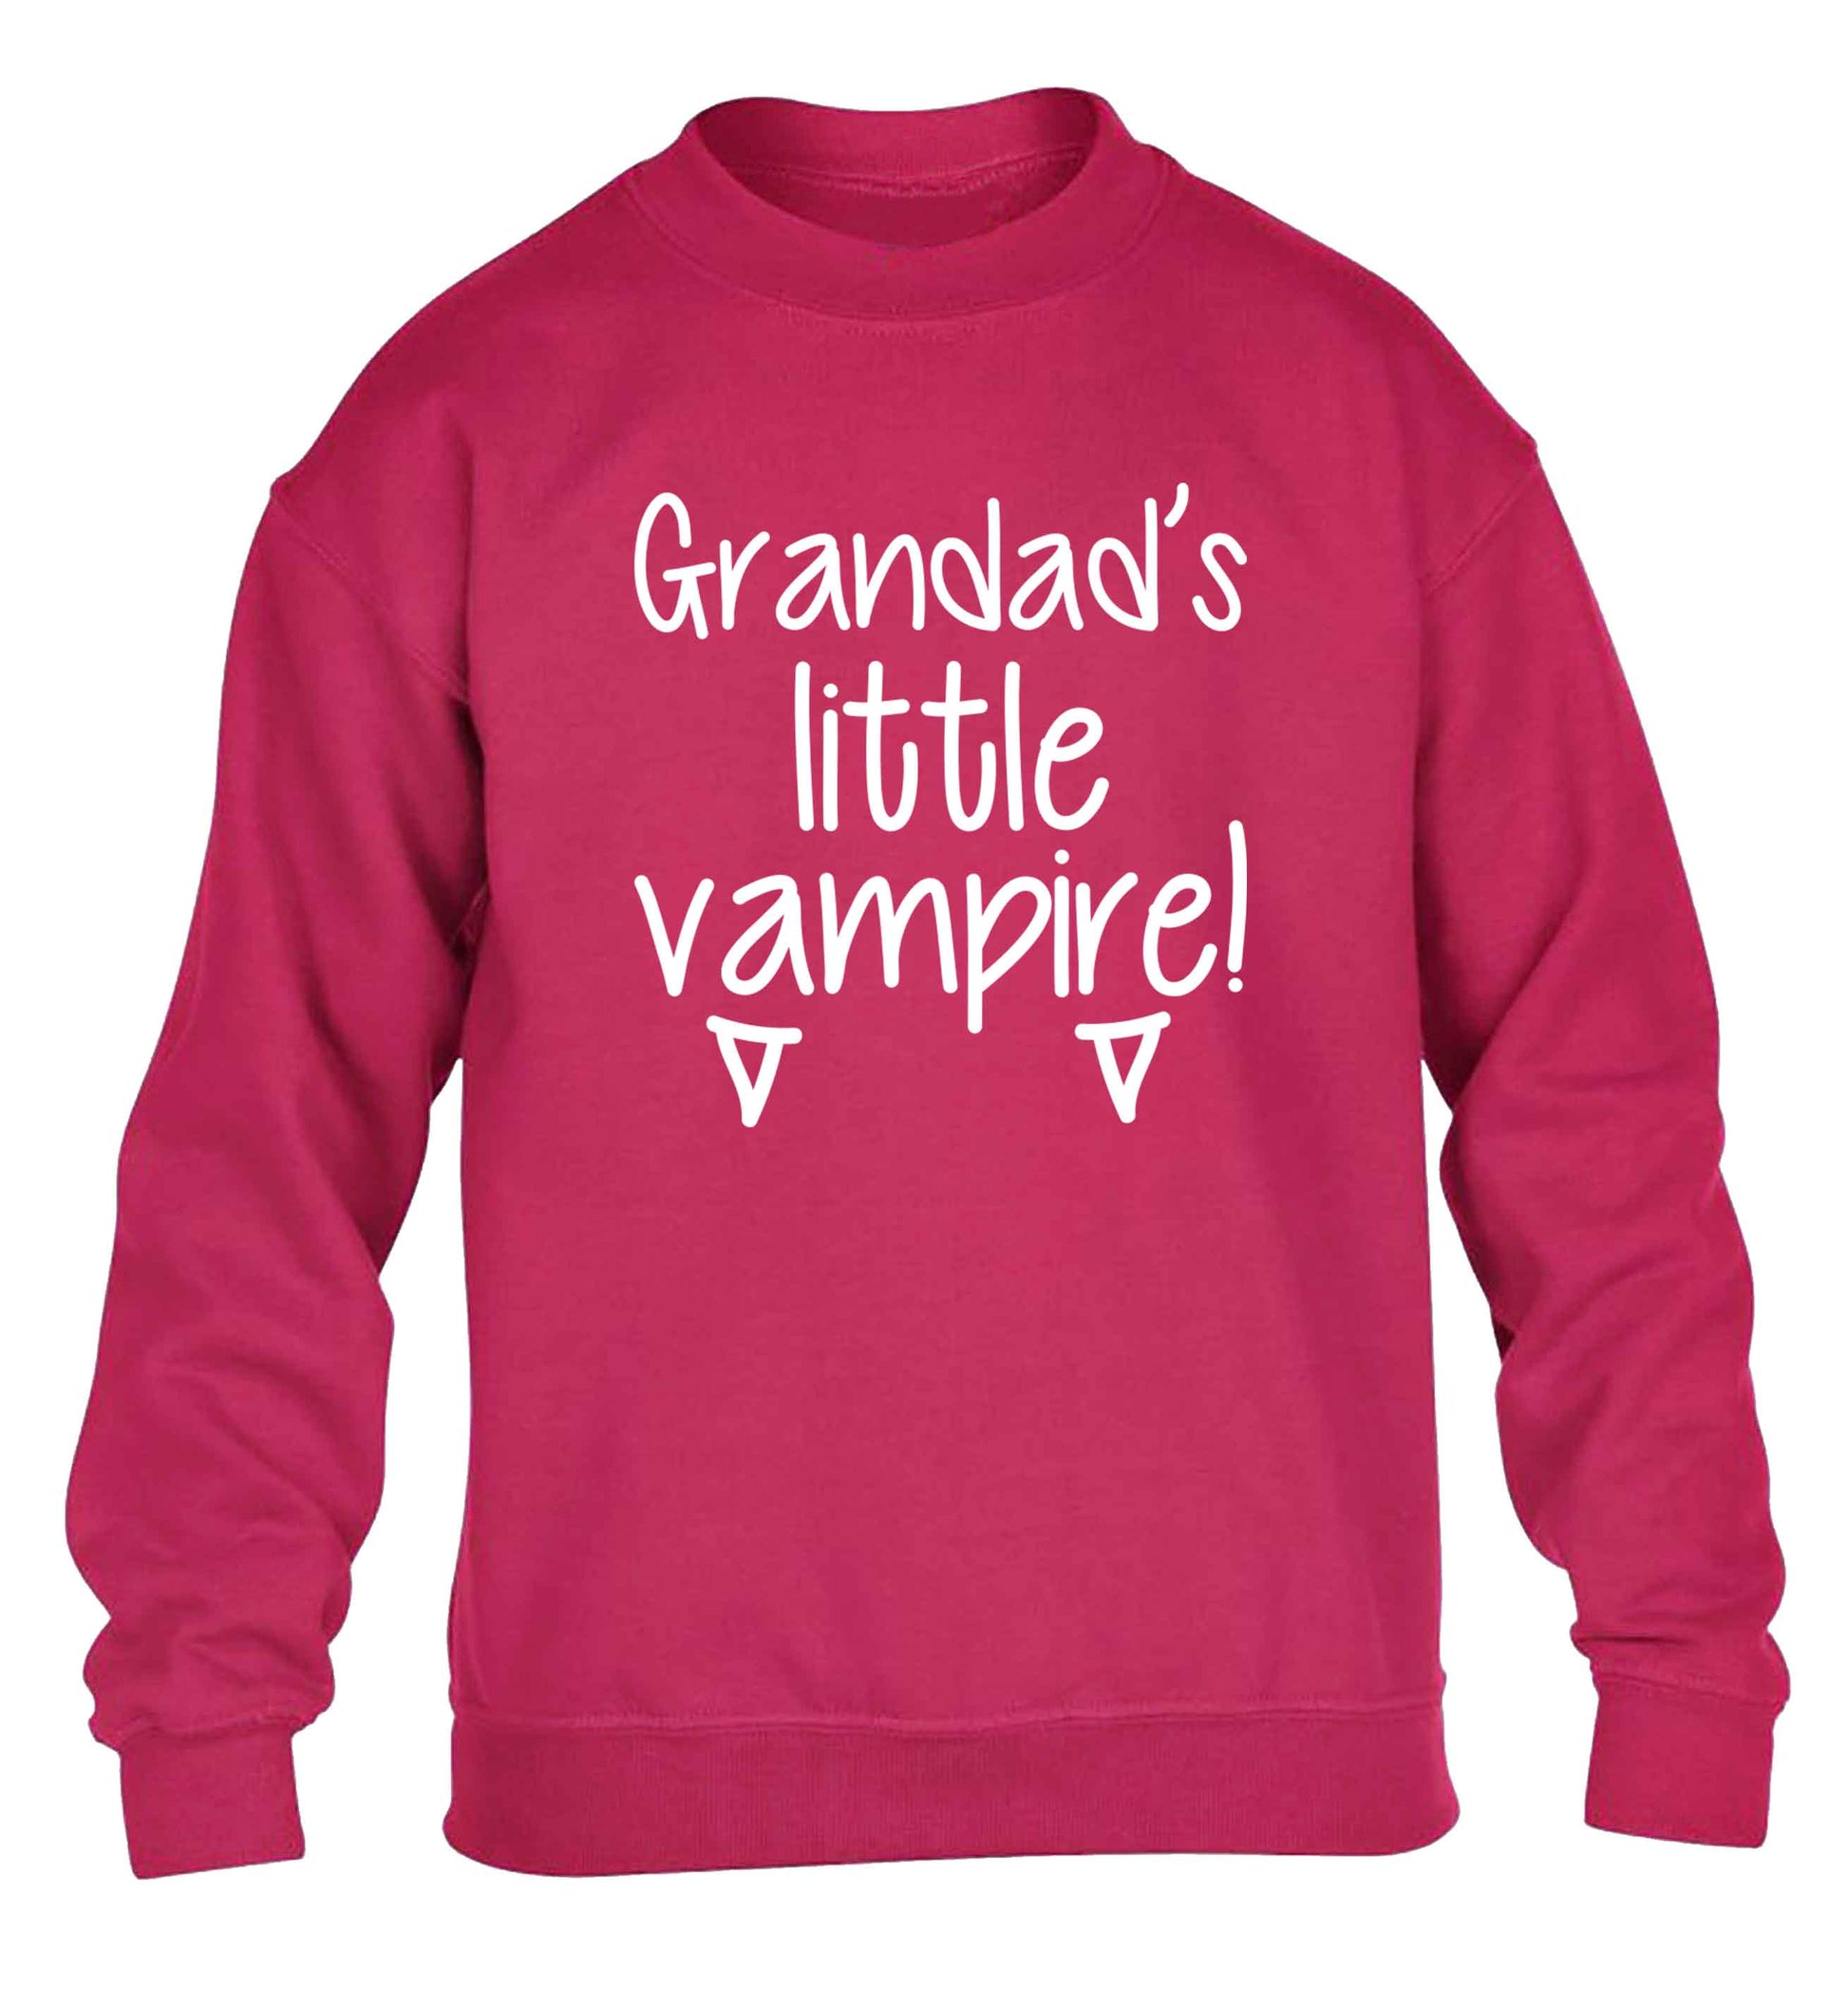 Grandad's little vampire children's pink sweater 12-13 Years